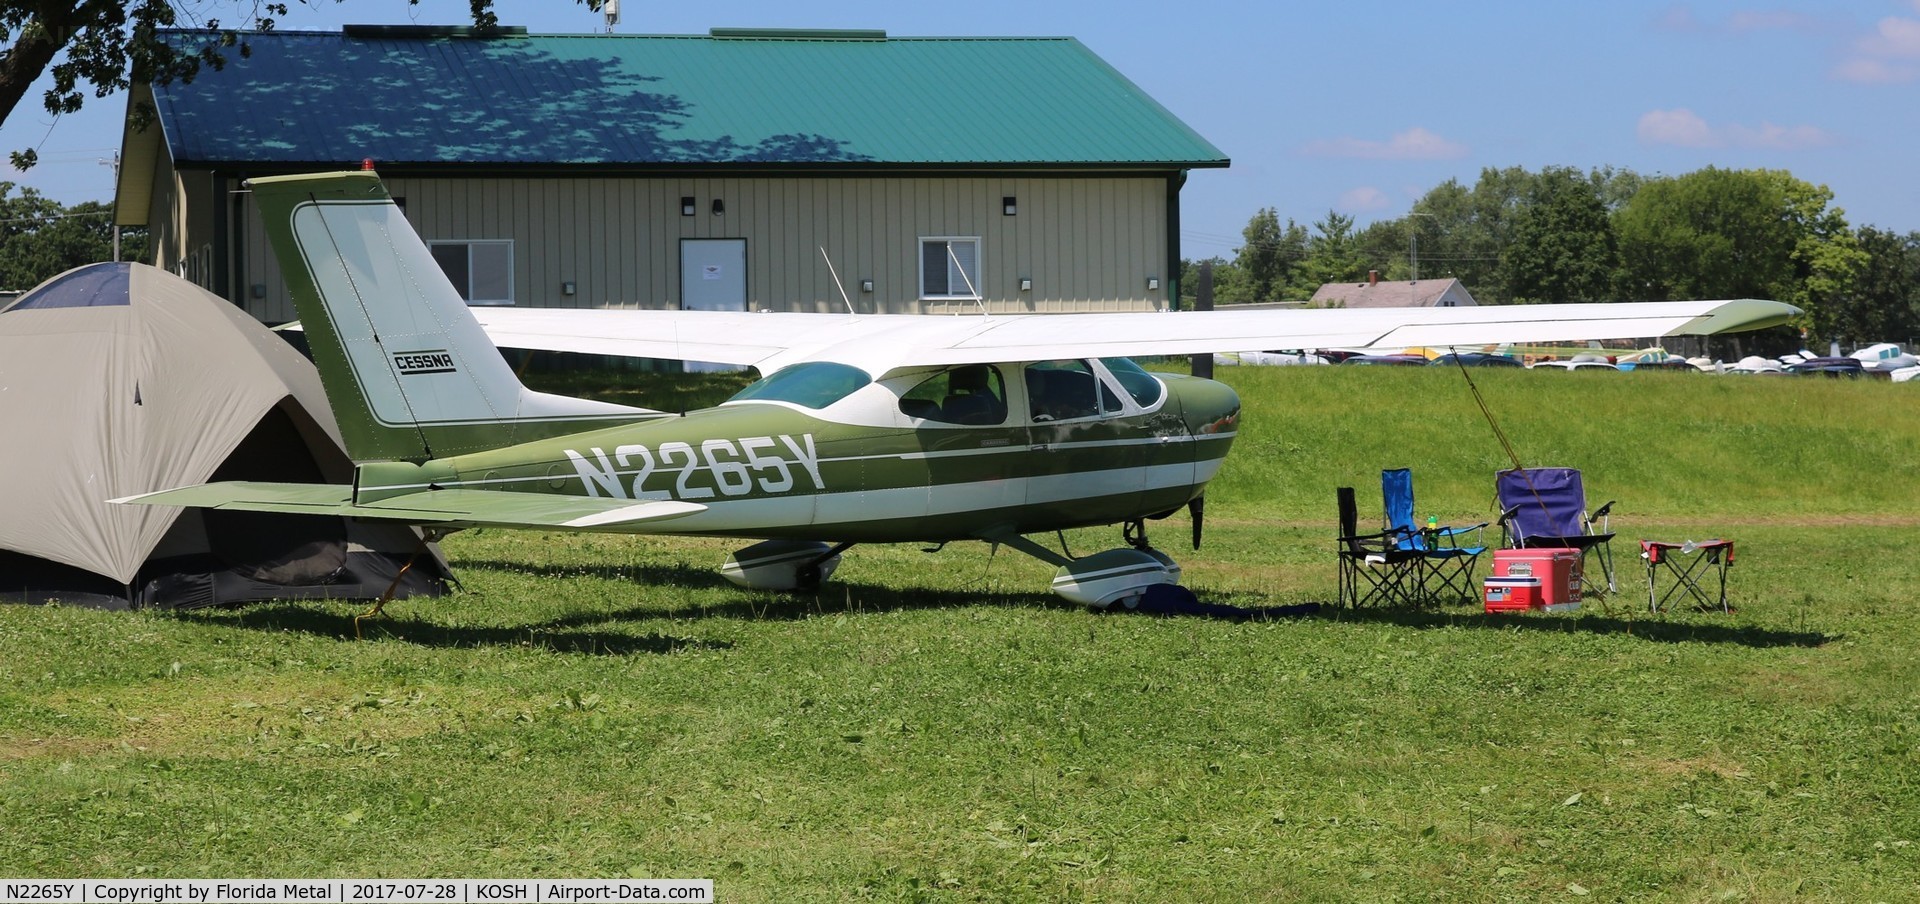 N2265Y, 1967 Cessna 177 Cardinal C/N 17700065, EAA OSH 2017